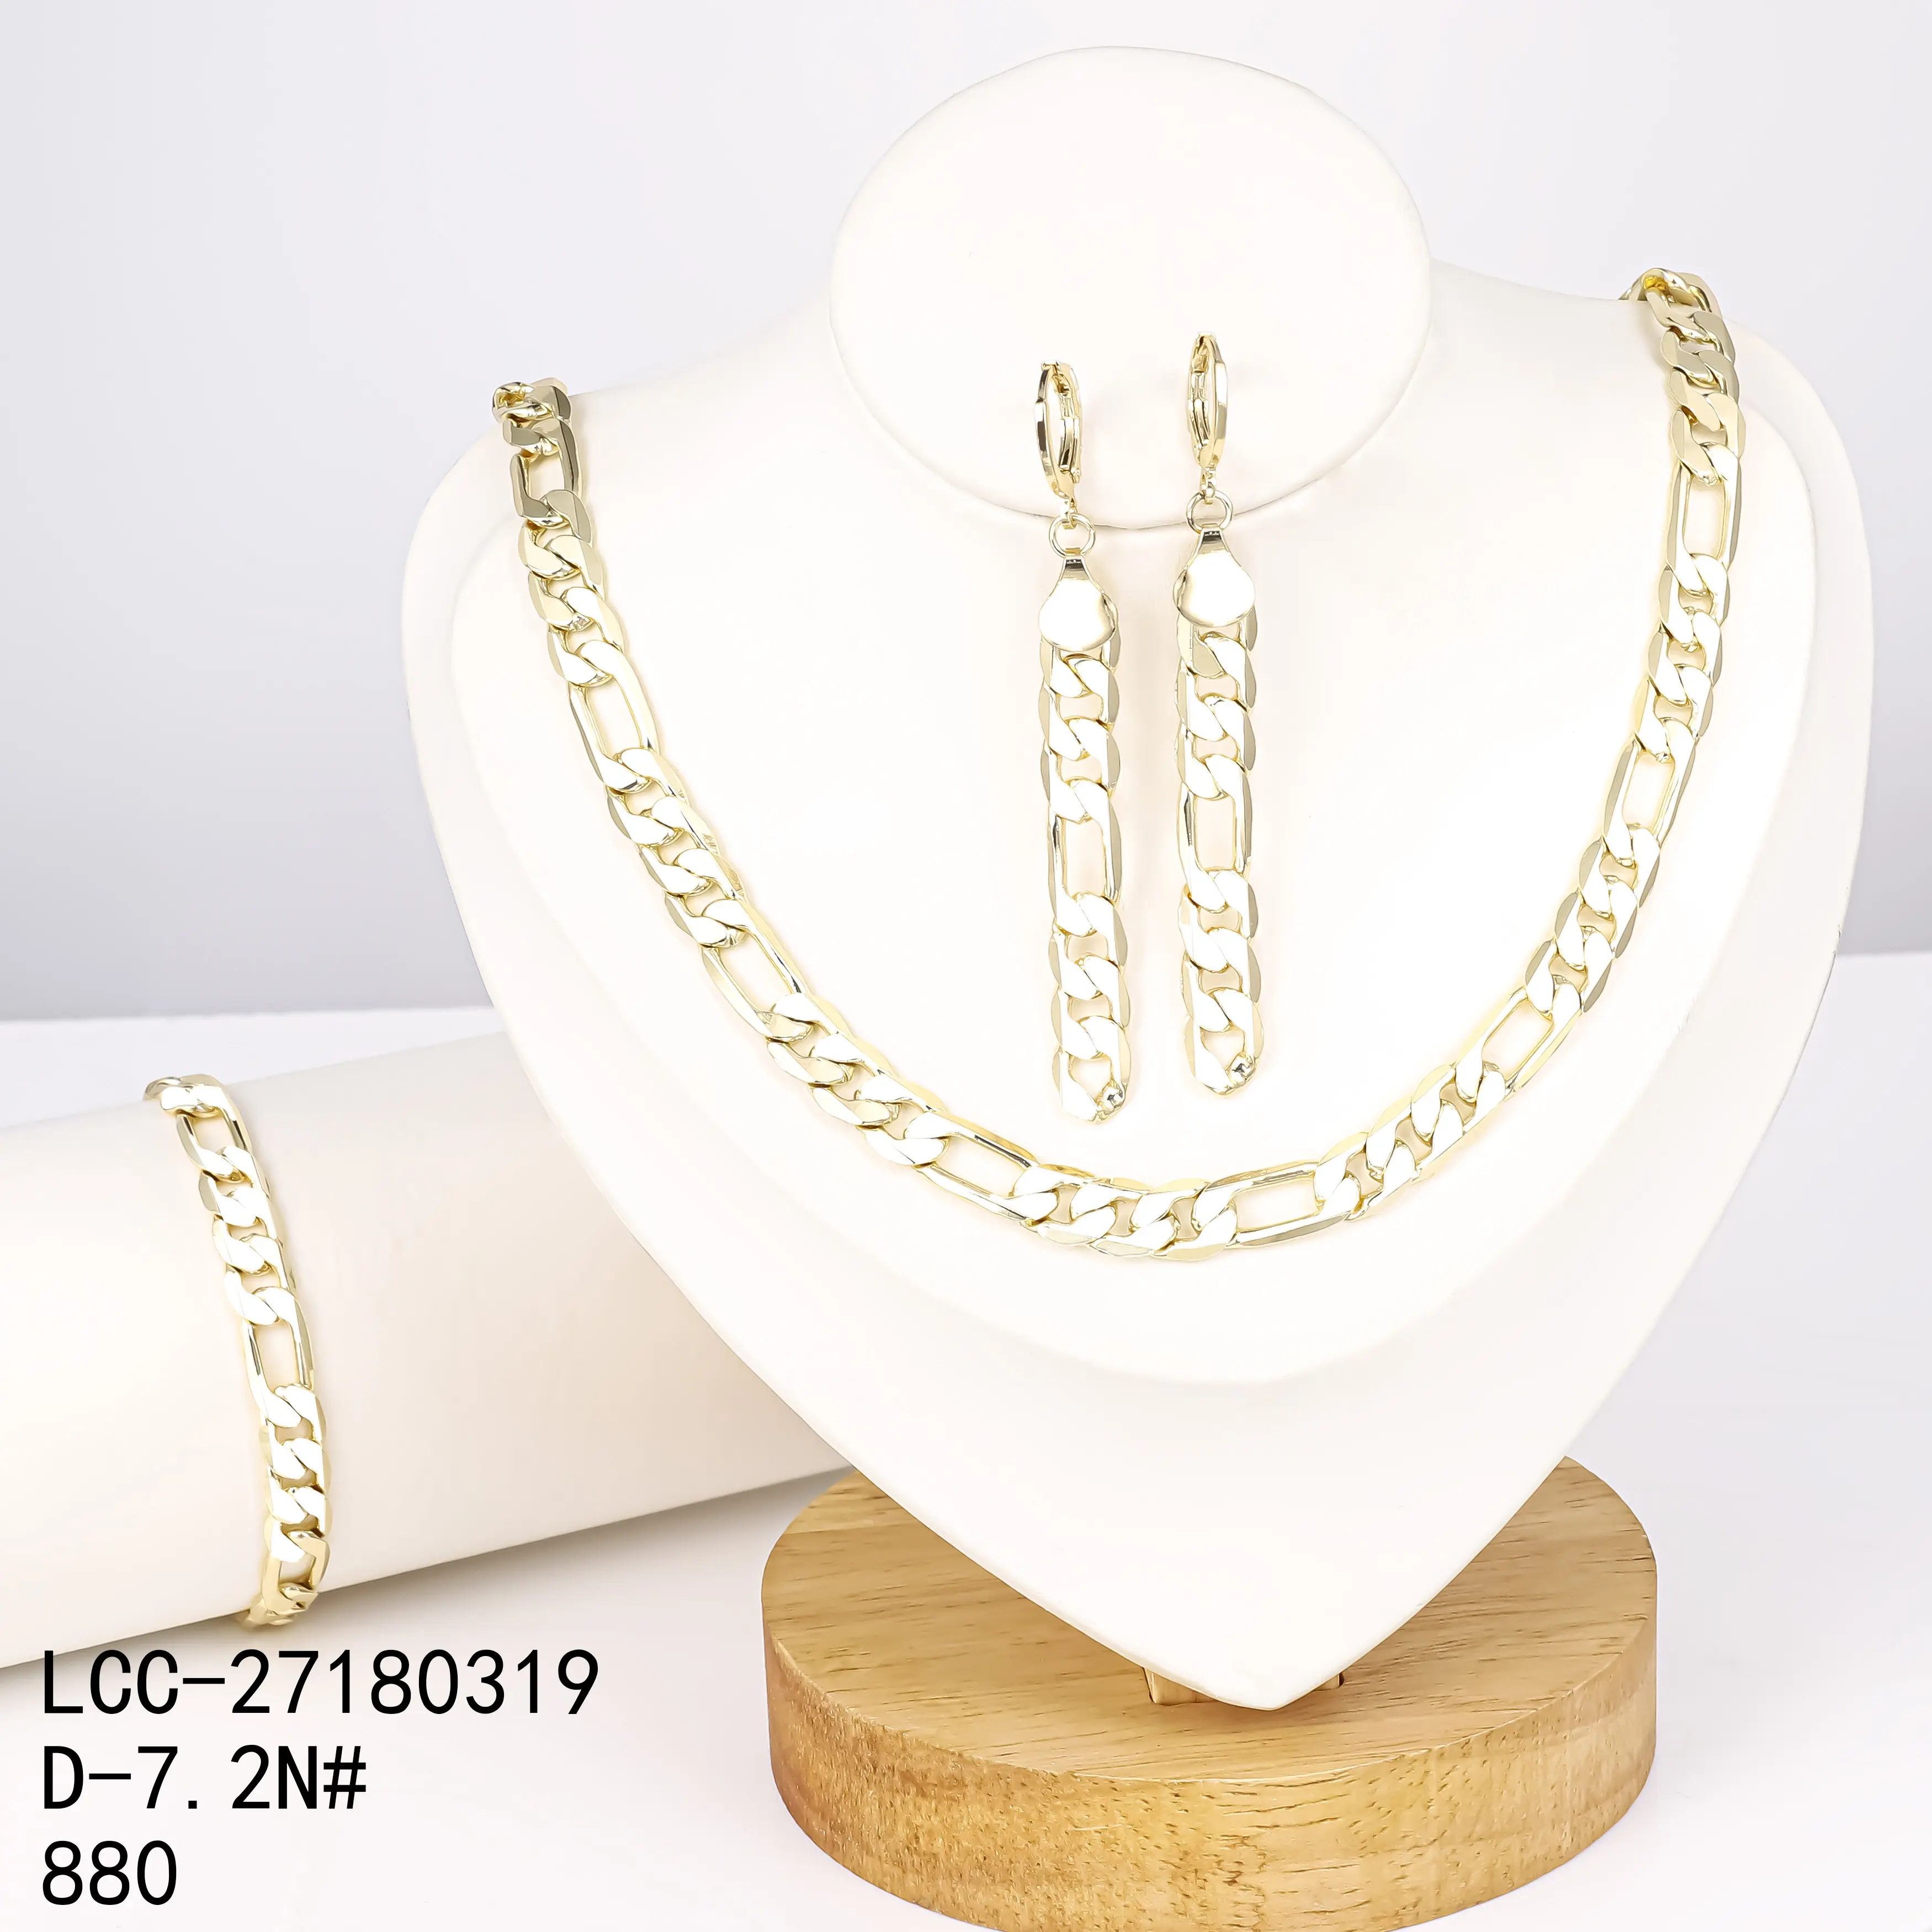 Perhiasan grosir 3 buah Set dalam jumlah besar laminado 14k conjunto de joyas kalung gelang anting-anting mata jahat manik Apple Kuba Set